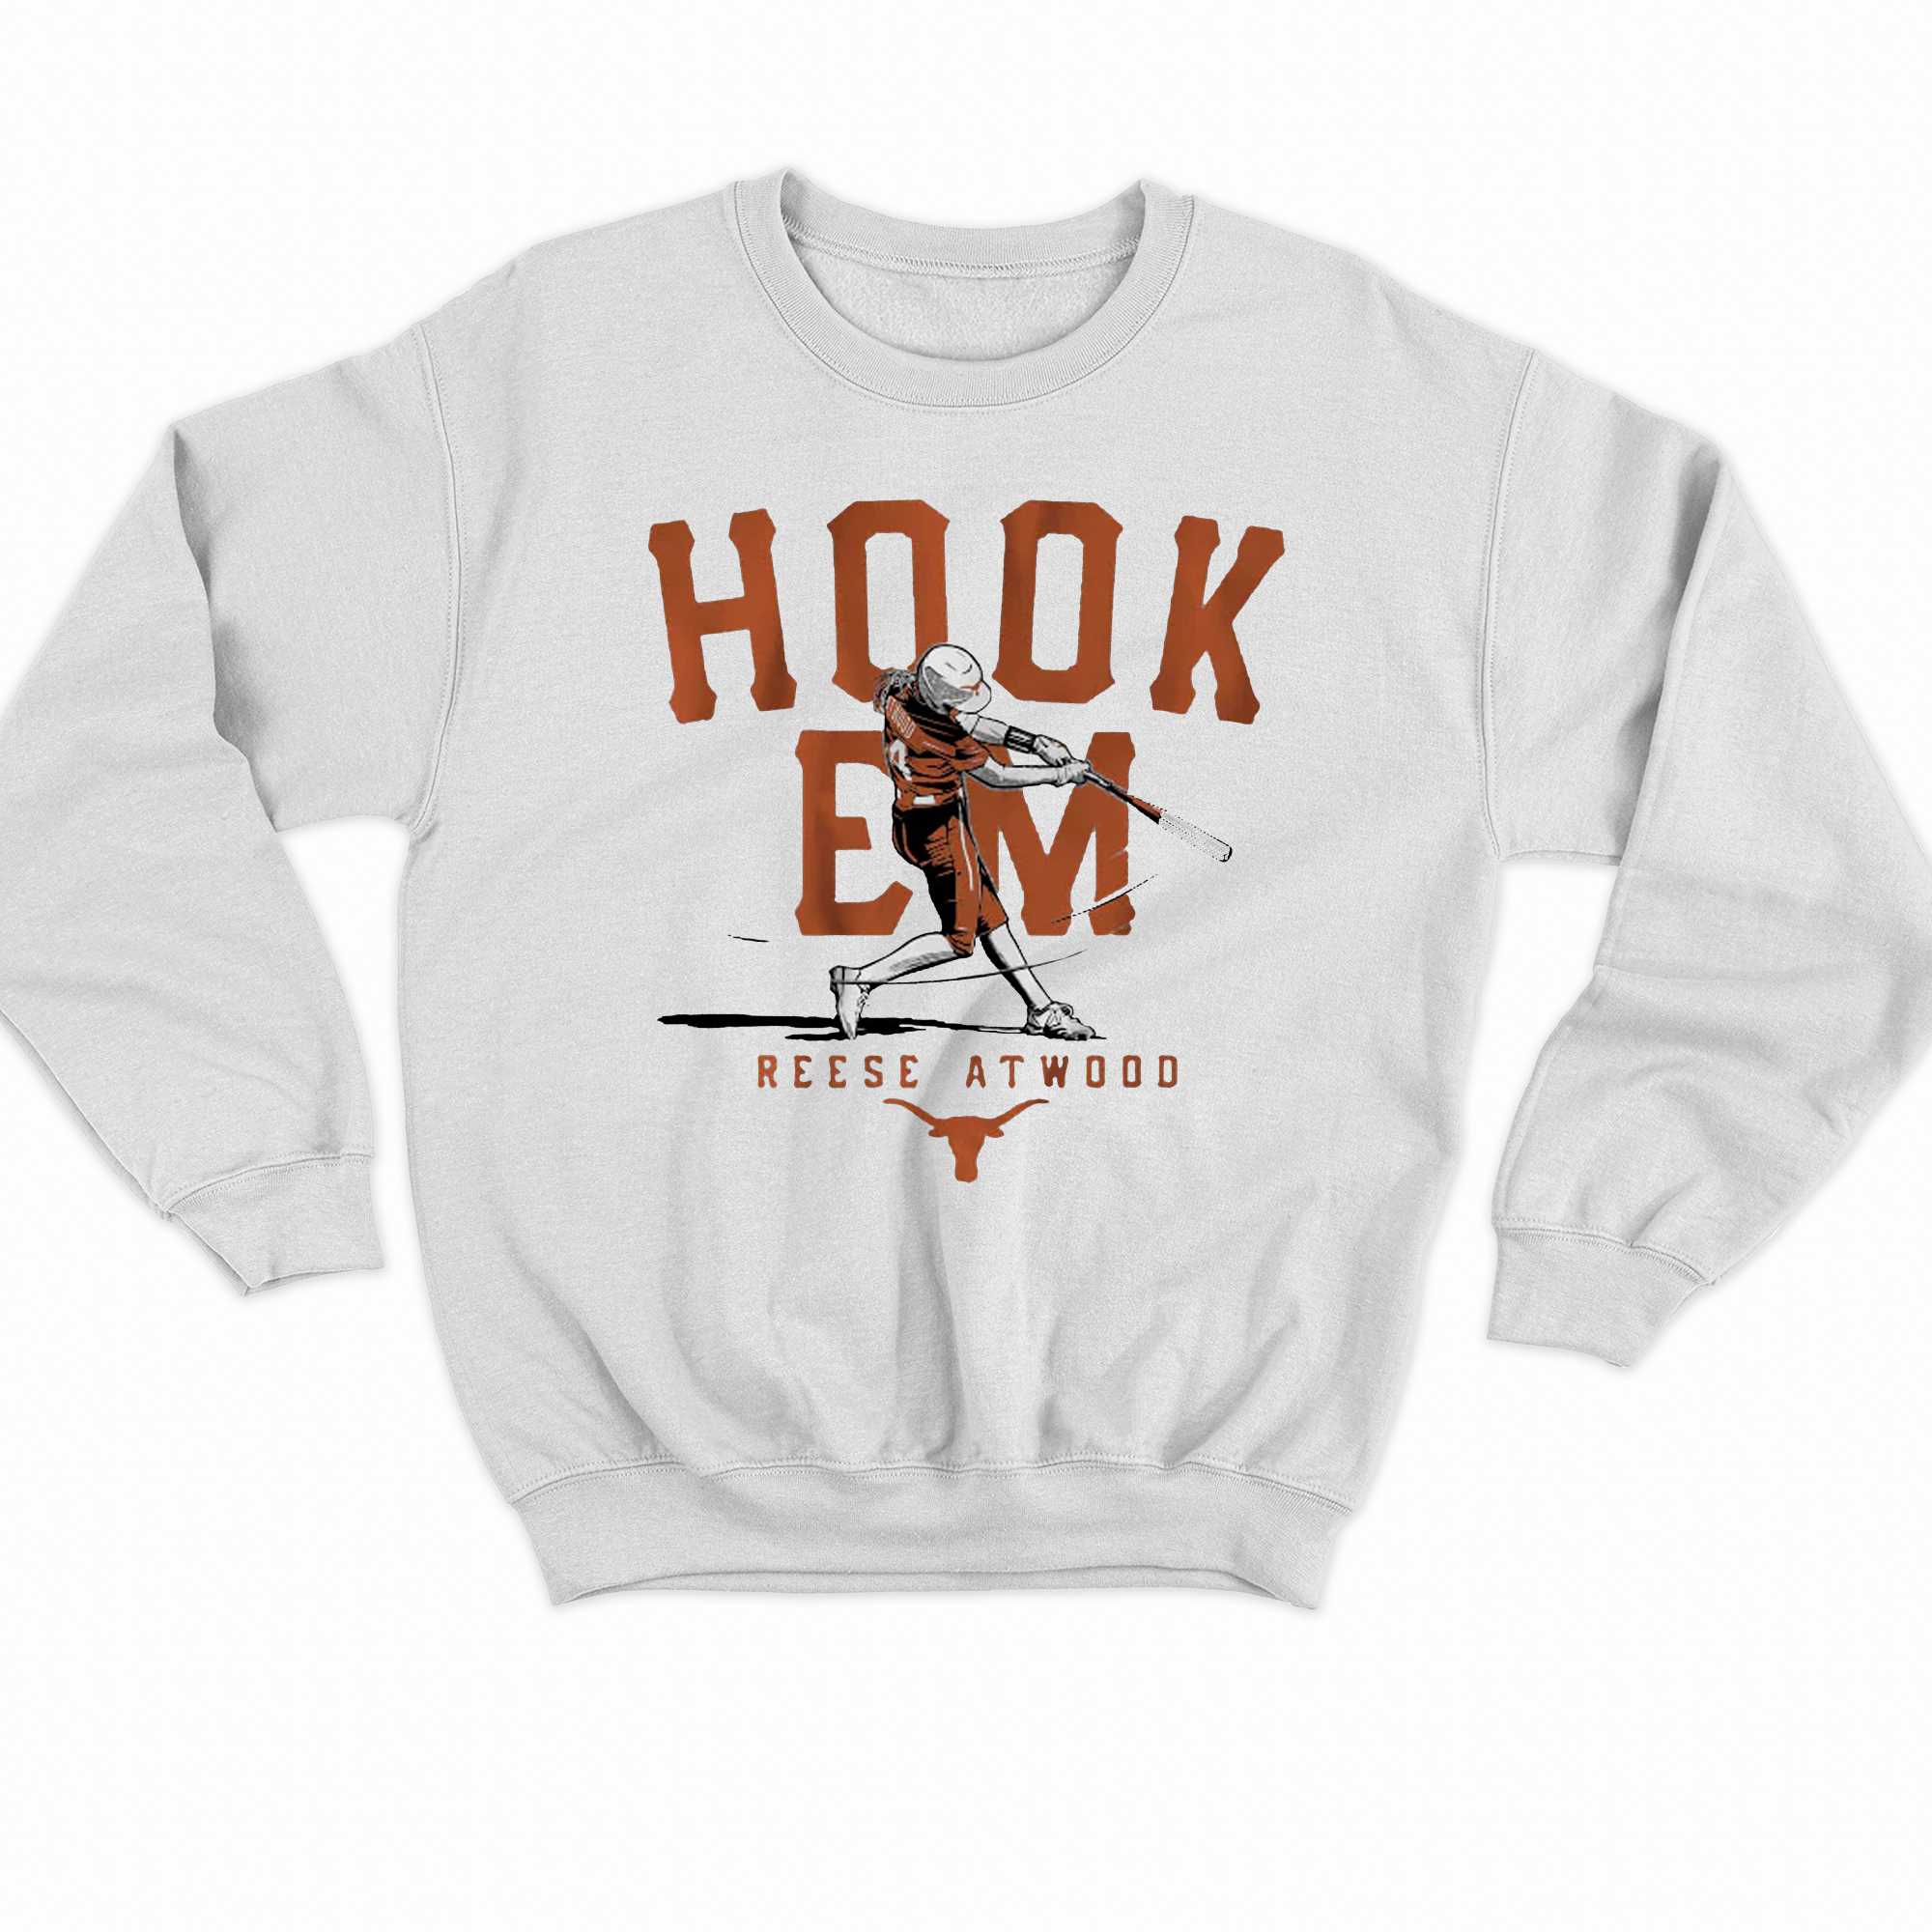 Texas Softball Reese Atwood Hook 'em Shirt - Shibtee Clothing